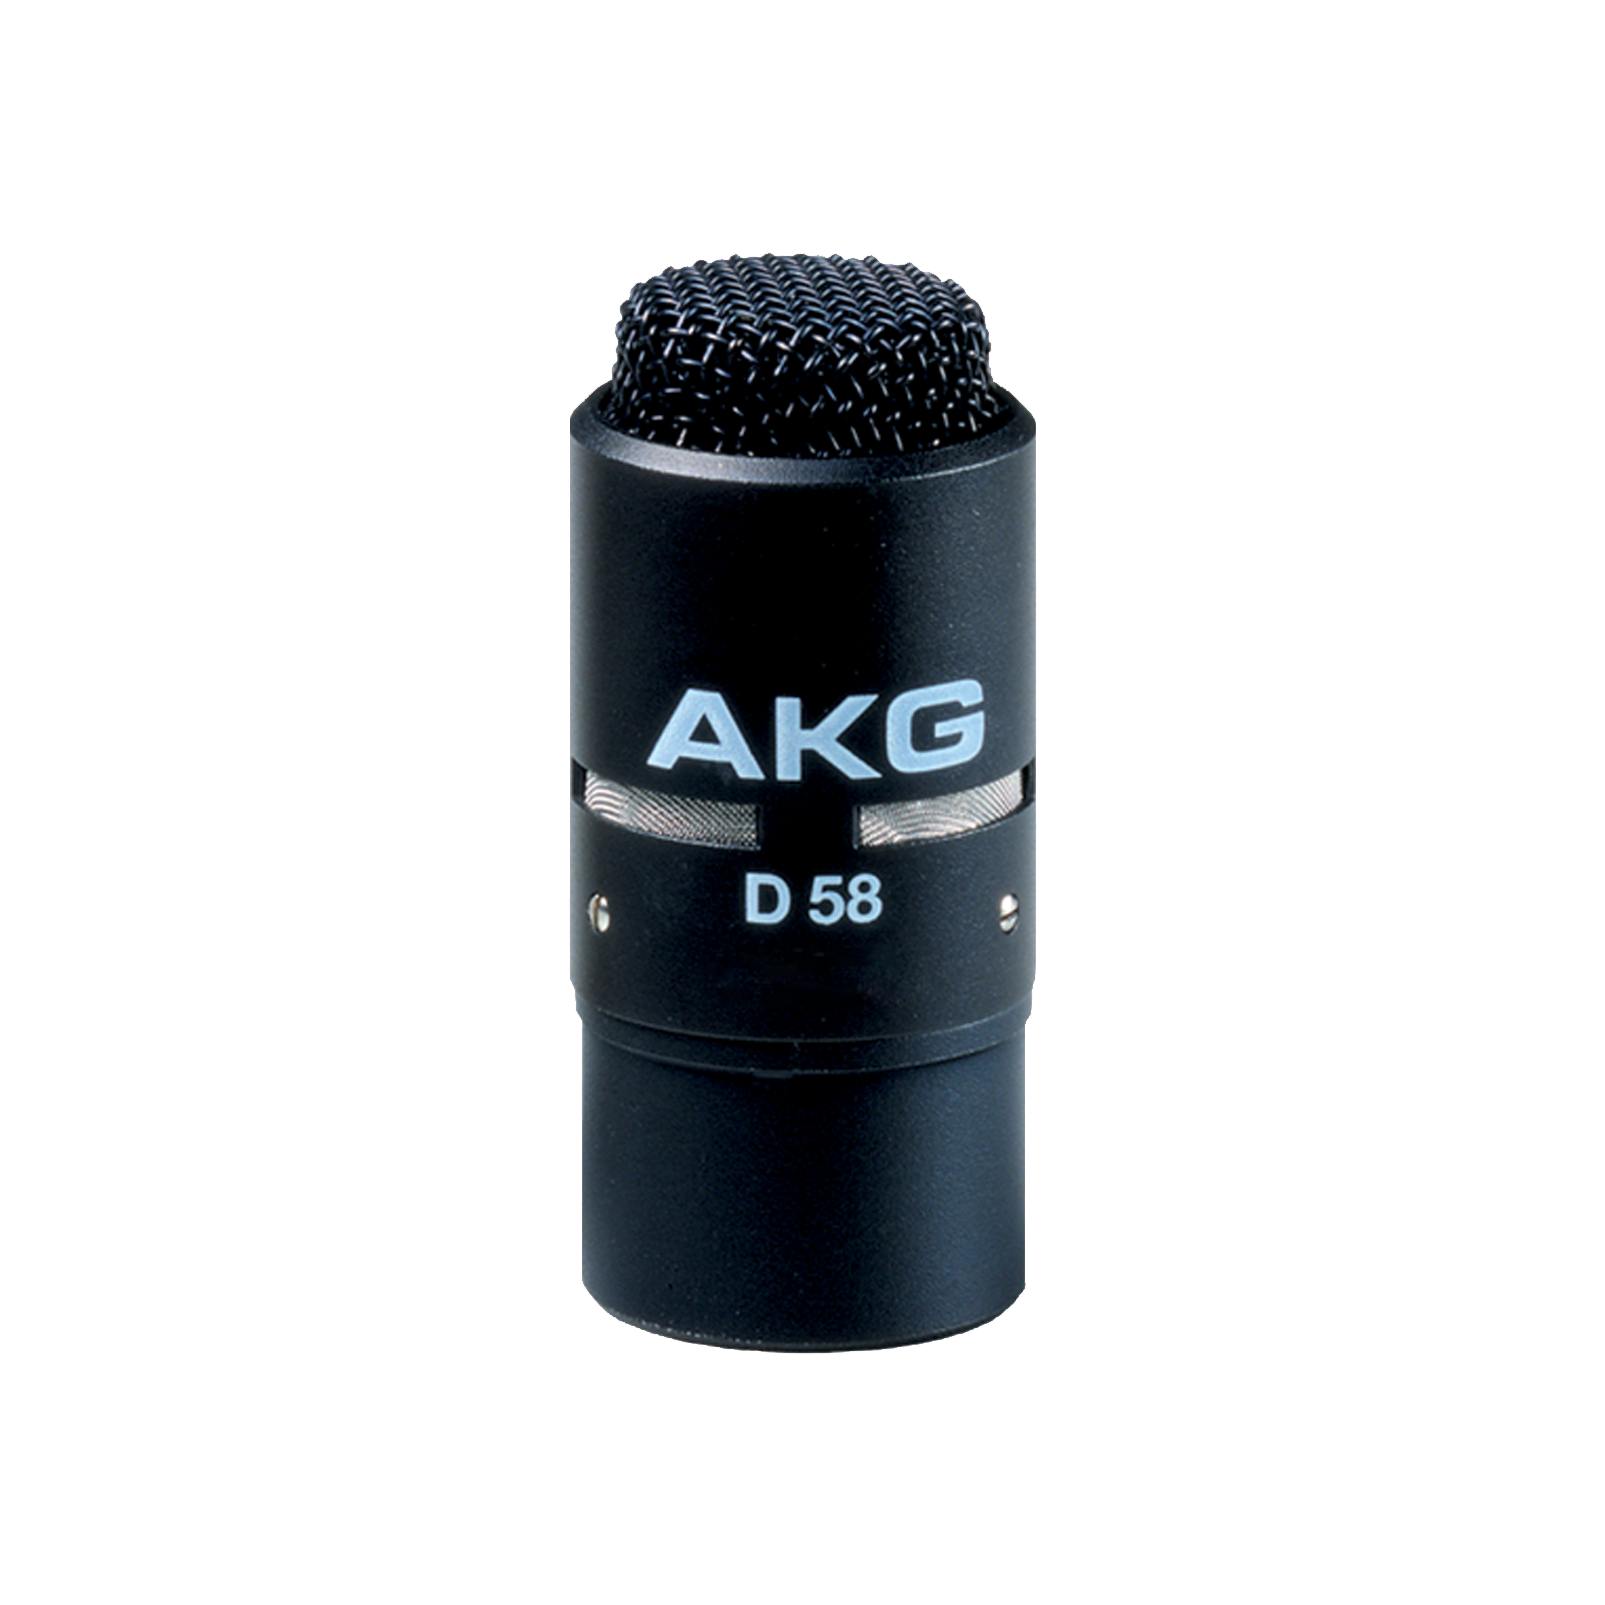 D58 E - Black - Professional dynamic noise-canceling microphone - Hero